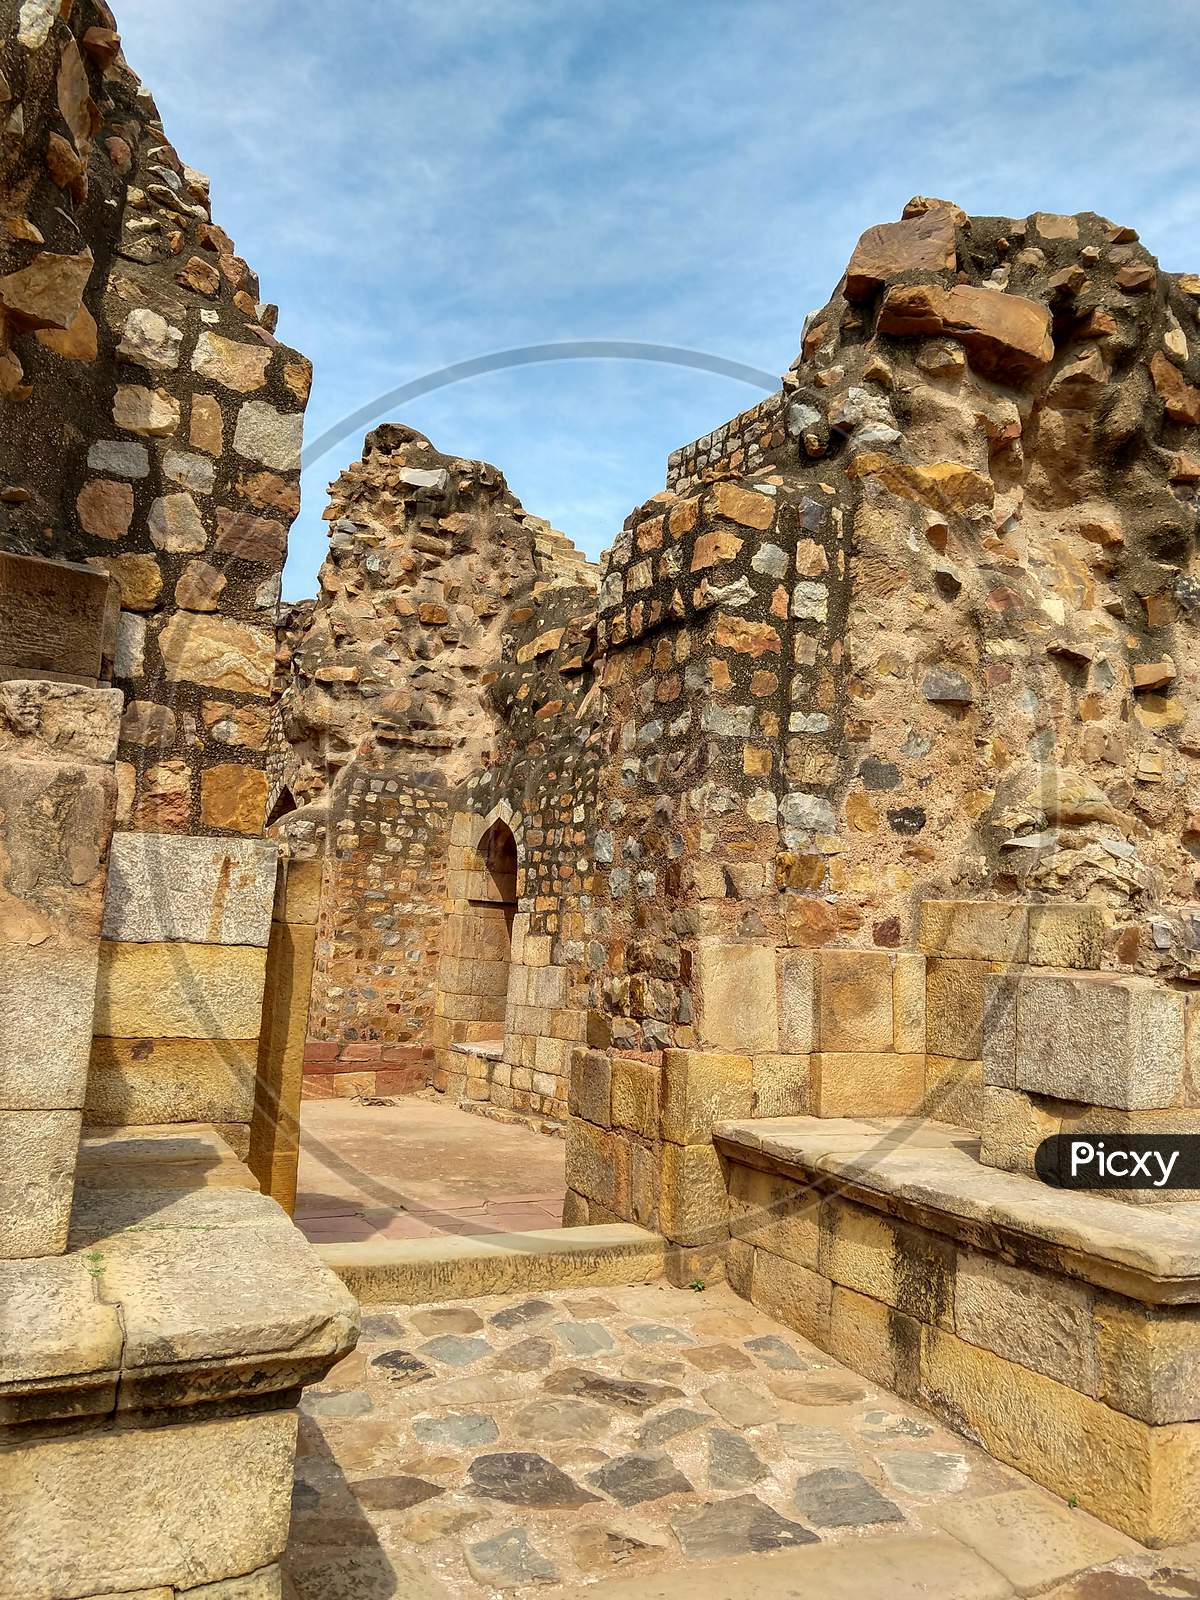 A Ruin Ancient Structure In The Qutub Minar Complex